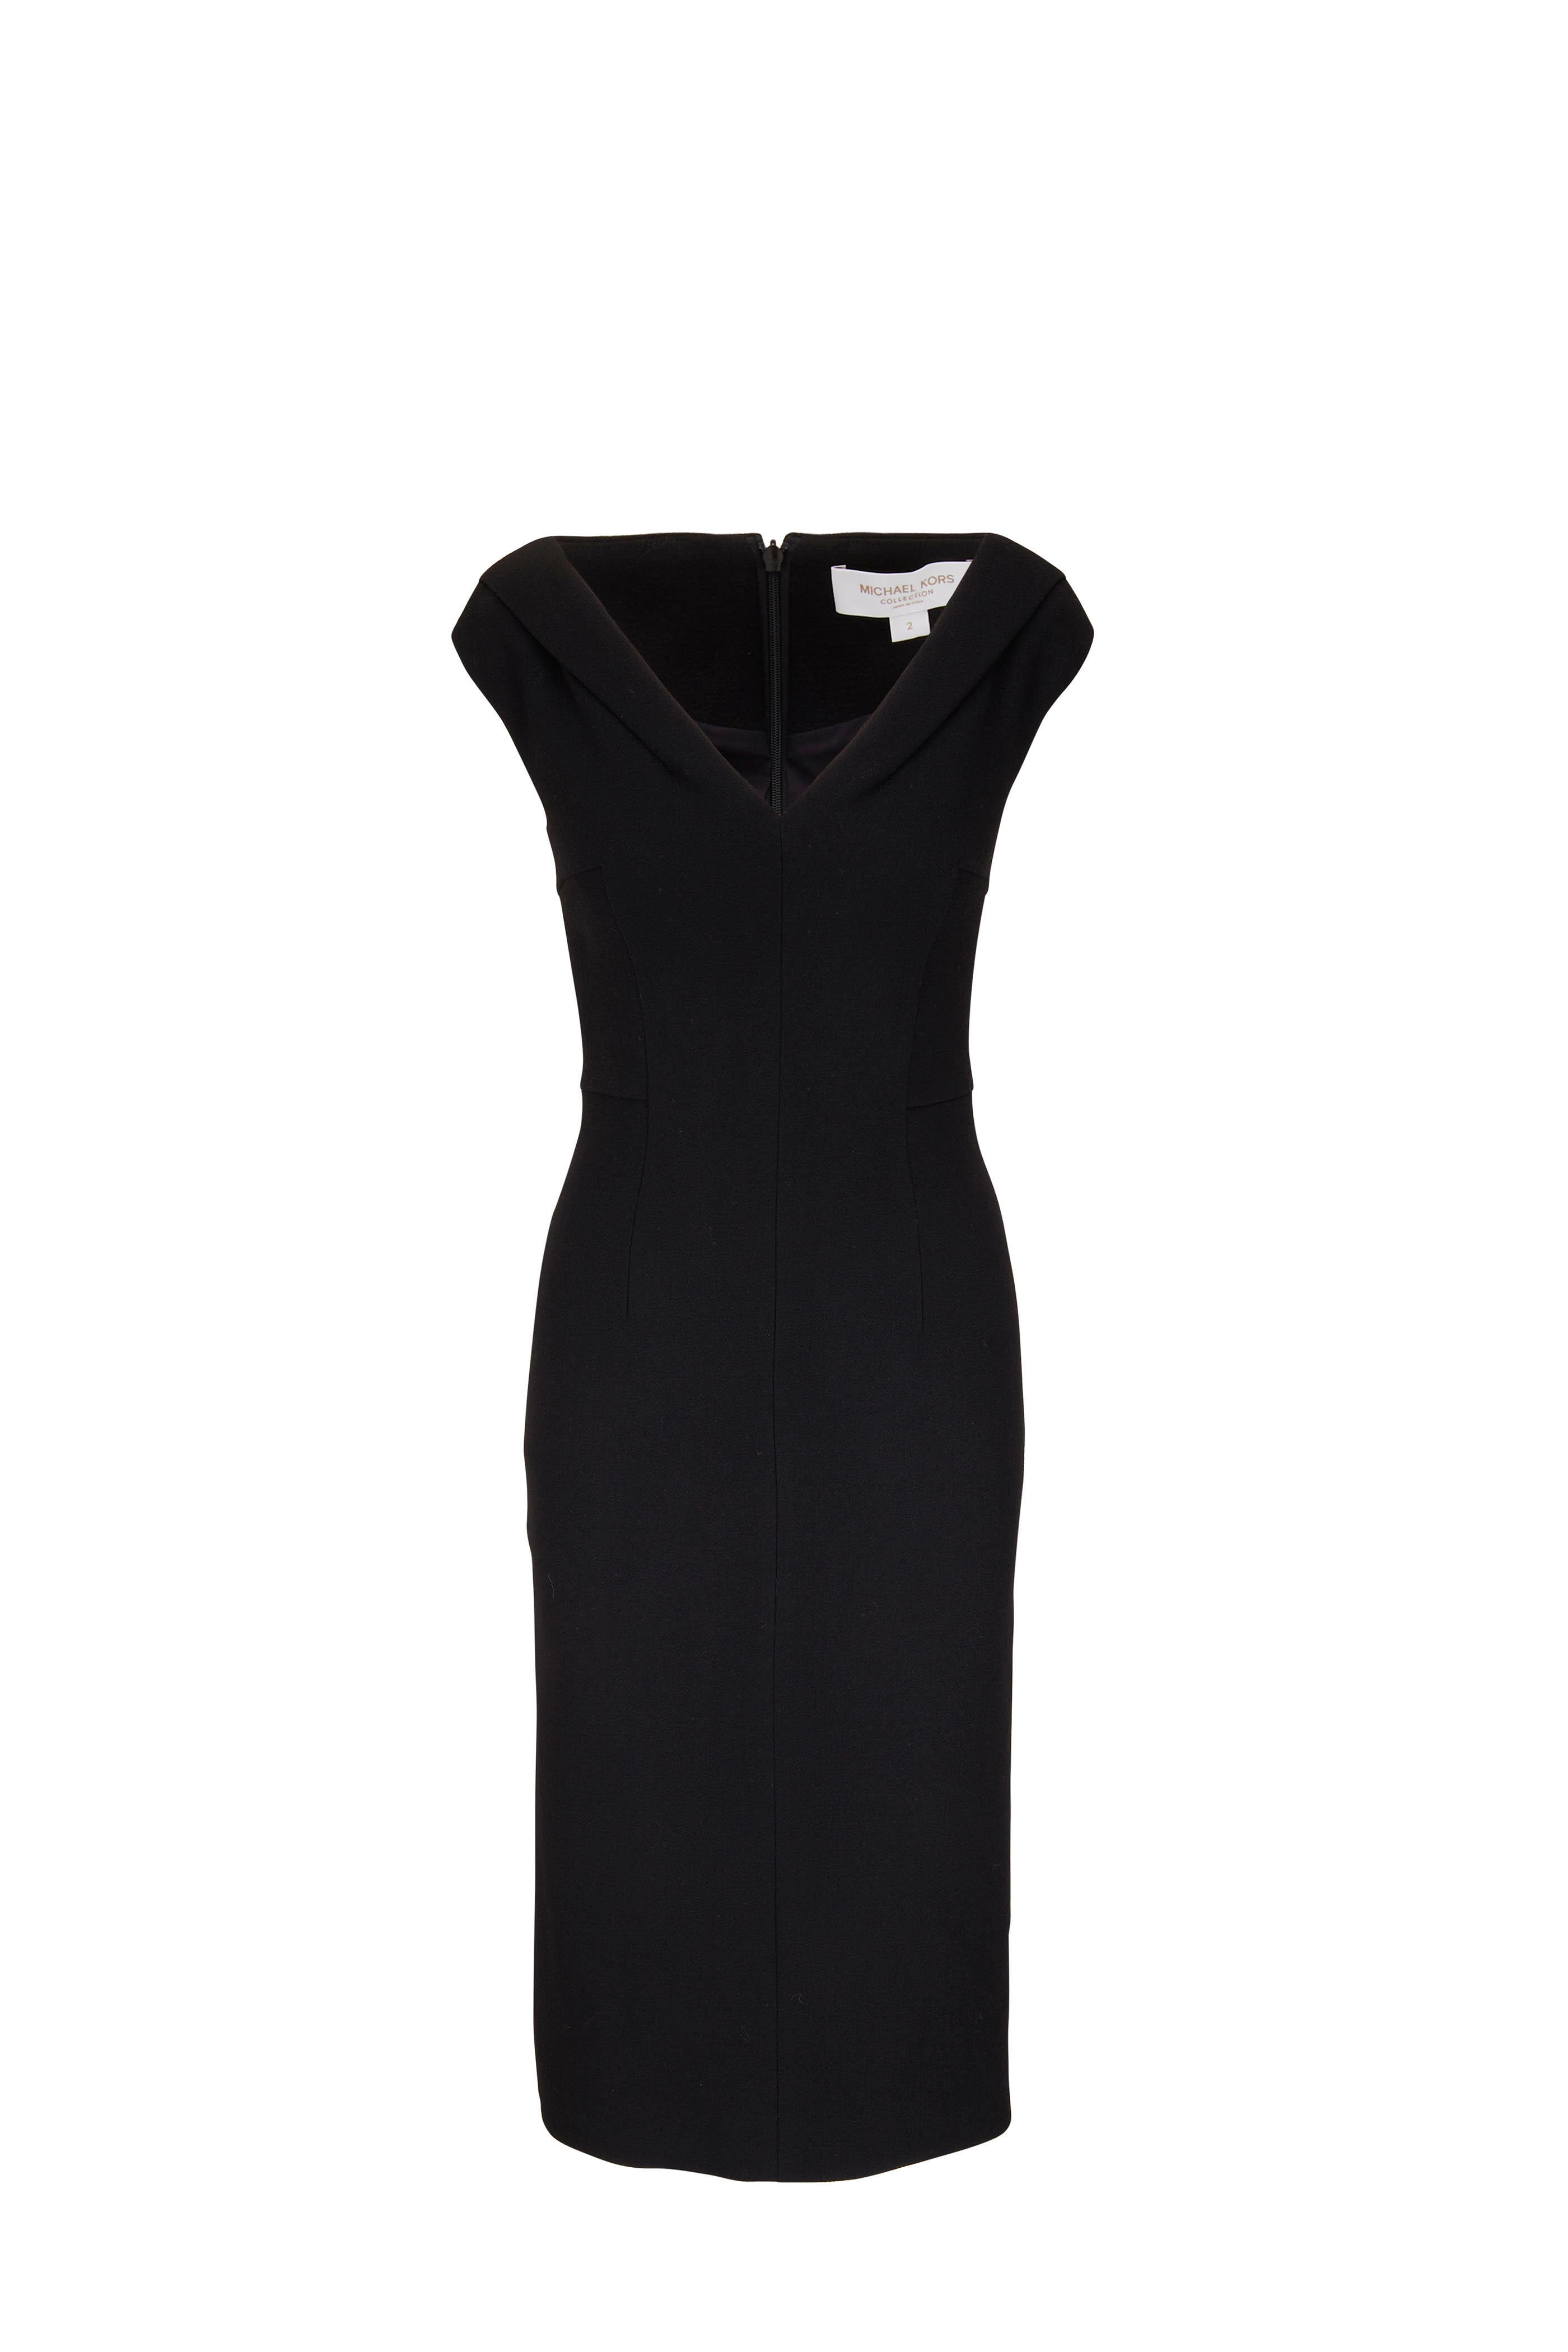 Michael Kors Collection - Black Wool Cap-Sleeve Midi Dress